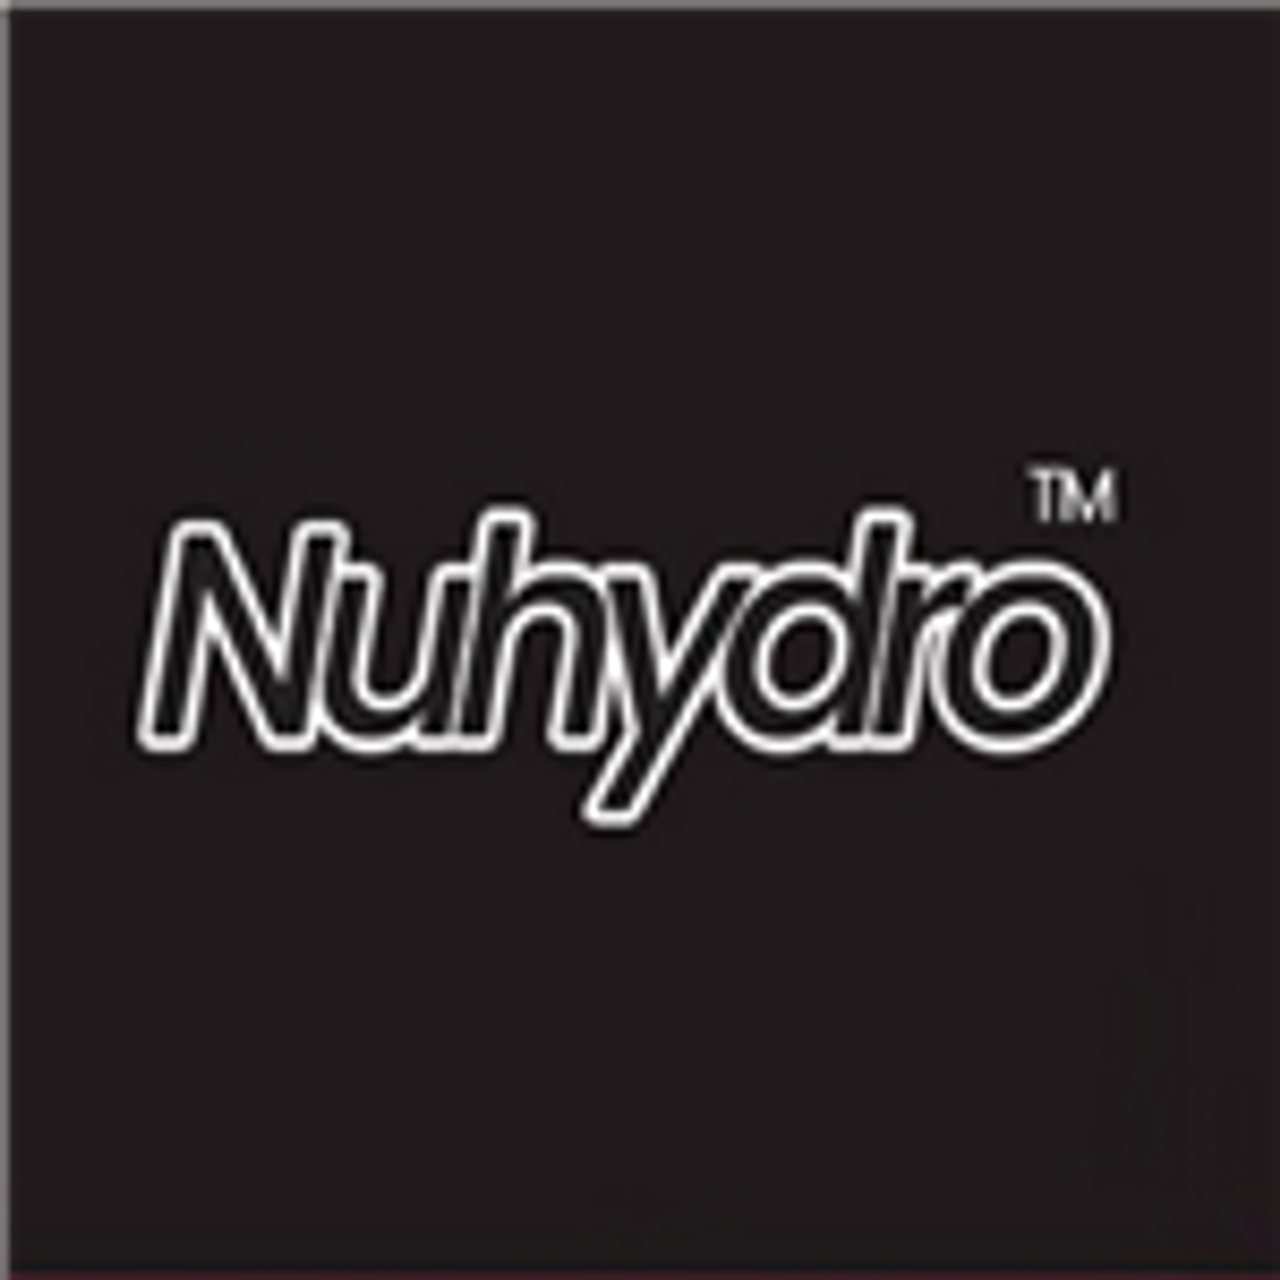 nuhydro